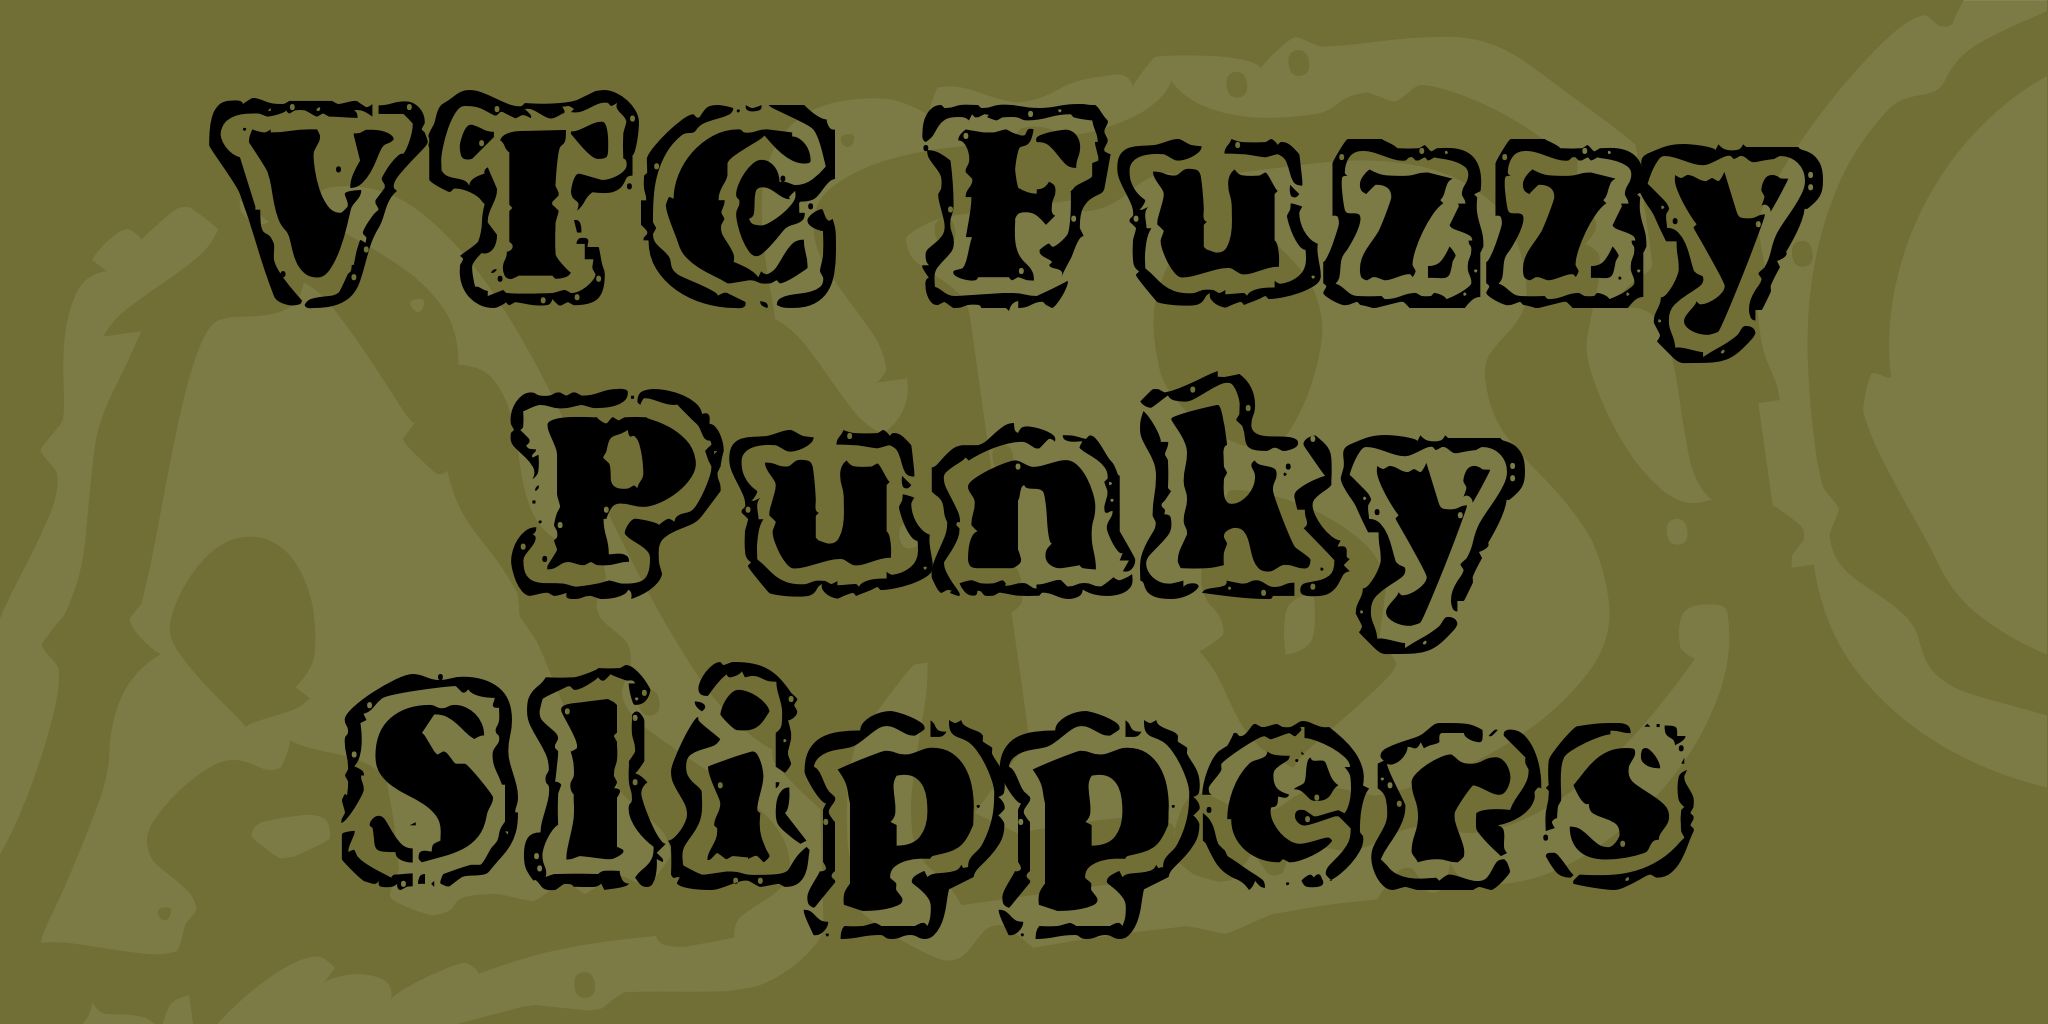 Vtc Fuzzy Punky Slippers